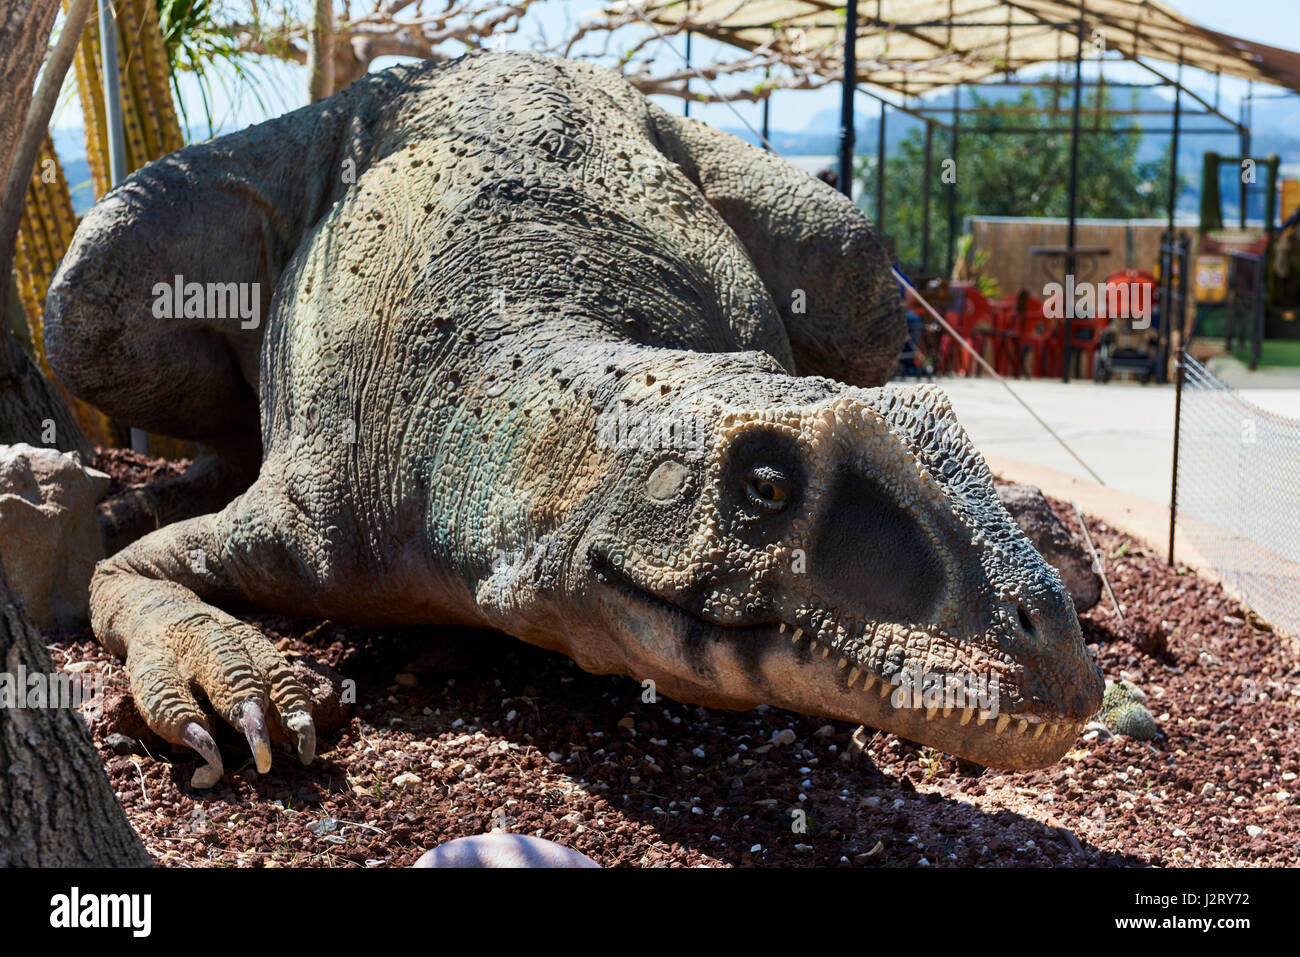 Algar, Spain - April 8, 2017: Realistic model of a dinosaur in the Dino Park of Algar. It is a unique entertainment and educational park. Spain Stock Photo